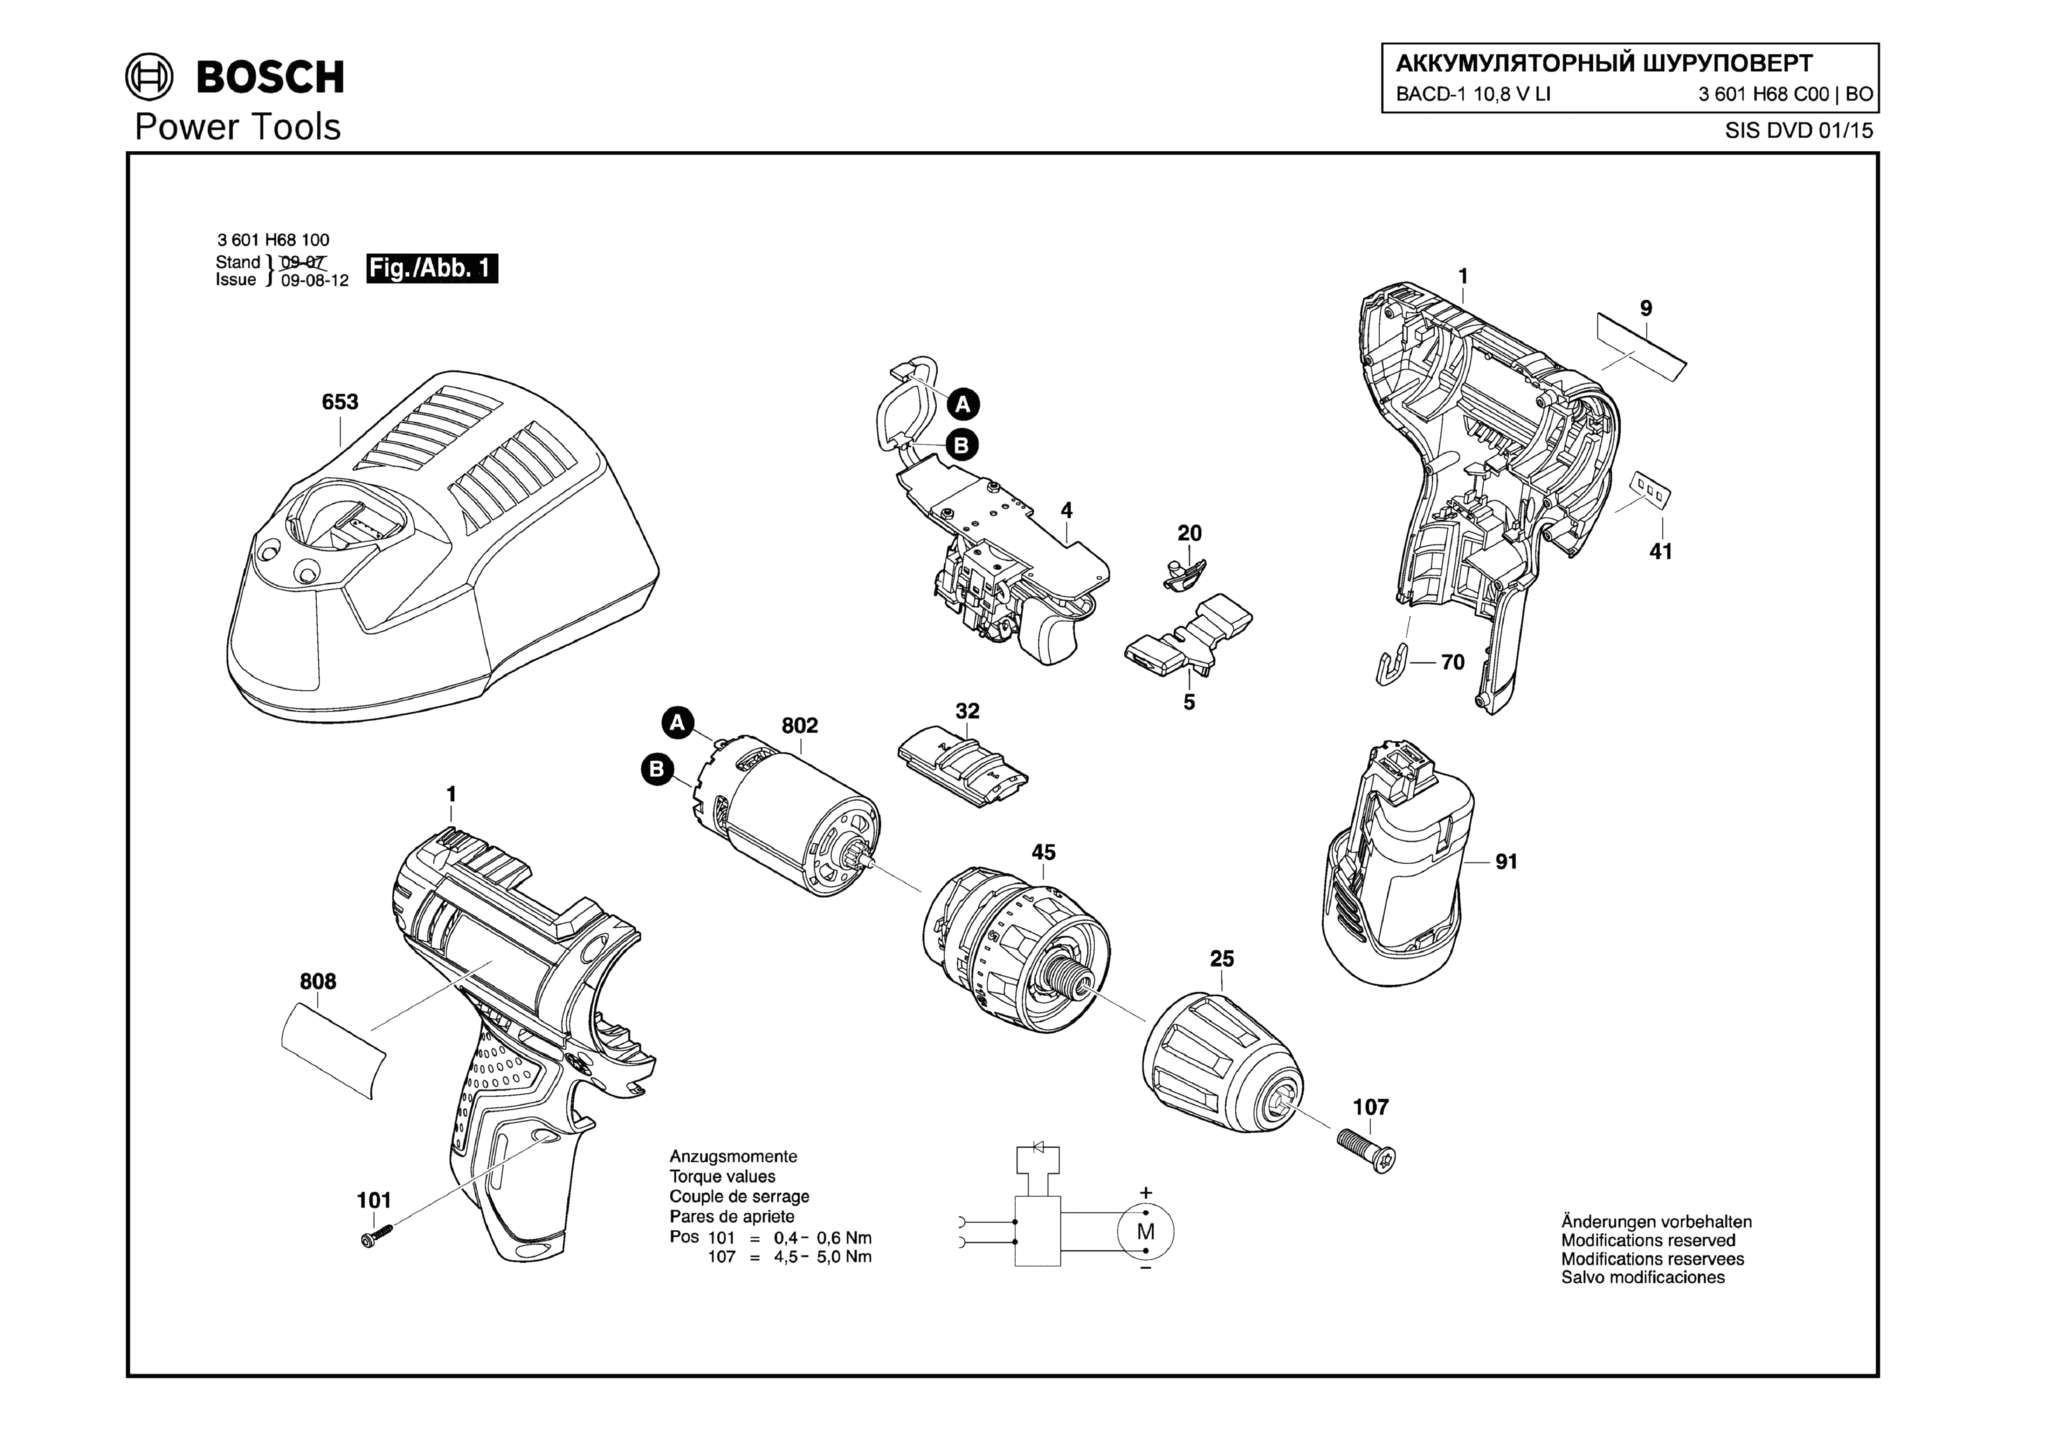 Запчасти, схема и деталировка Bosch BACD-1 10,8 V LI (ТИП 3601H68C00)